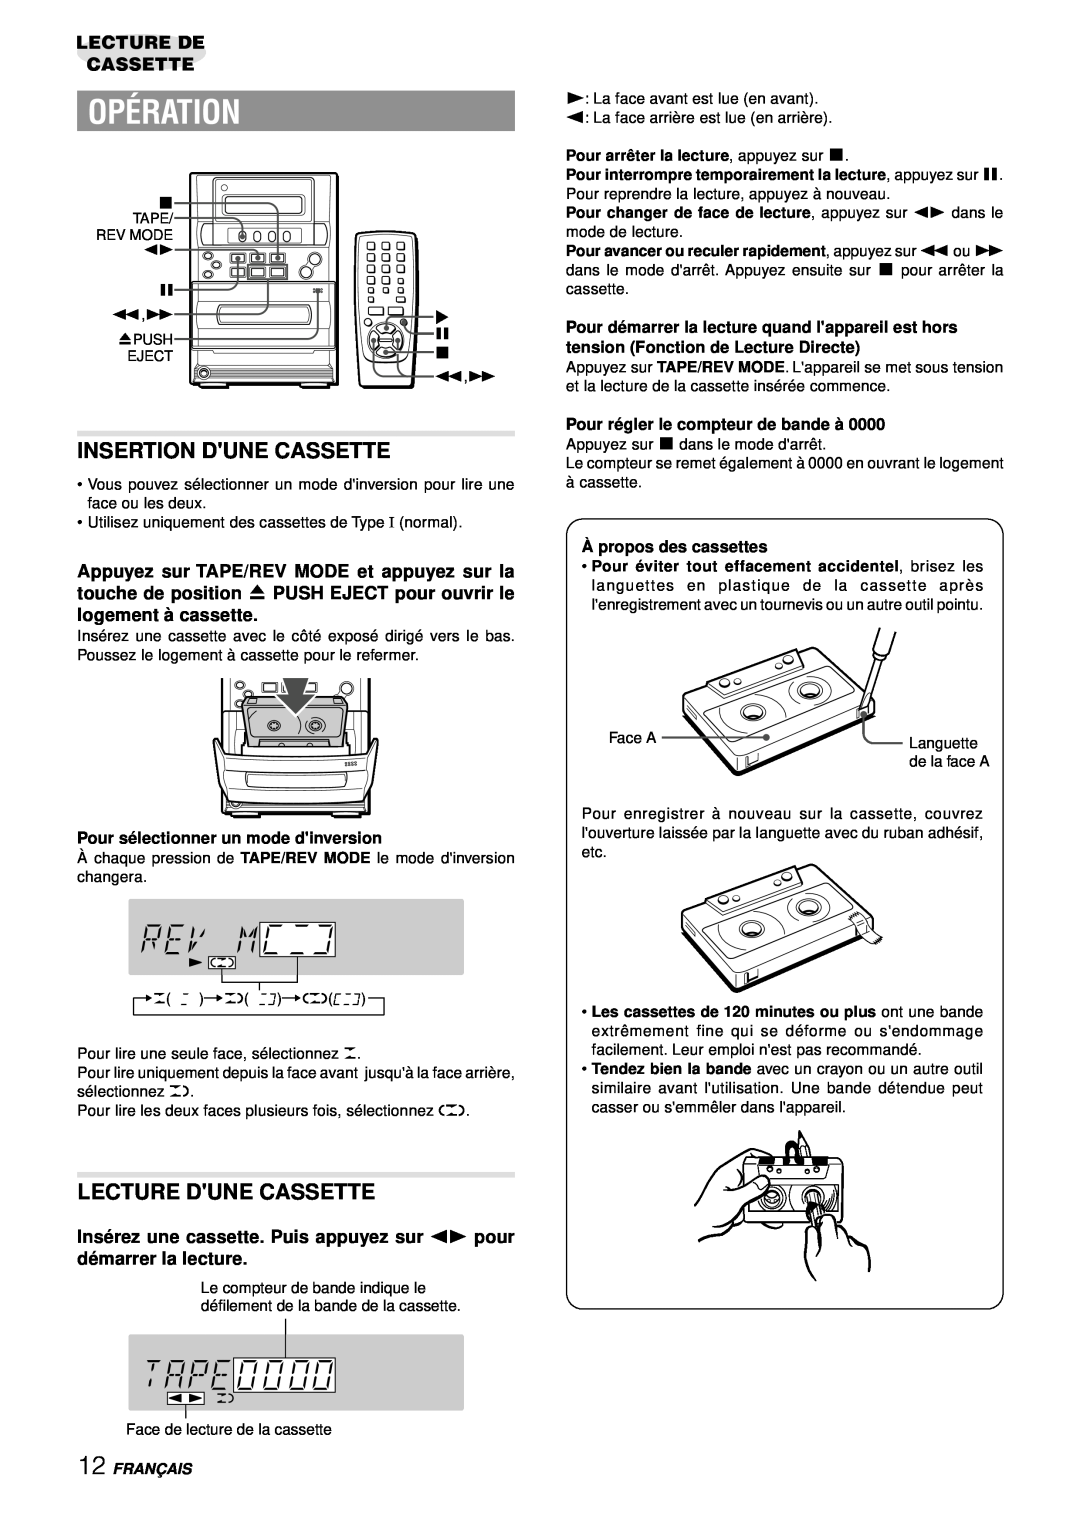 Aiwa LCX-357 manual Insertion Dune Cassette, Lecture Dune Cassette, Opération, Lecture De Cassette 